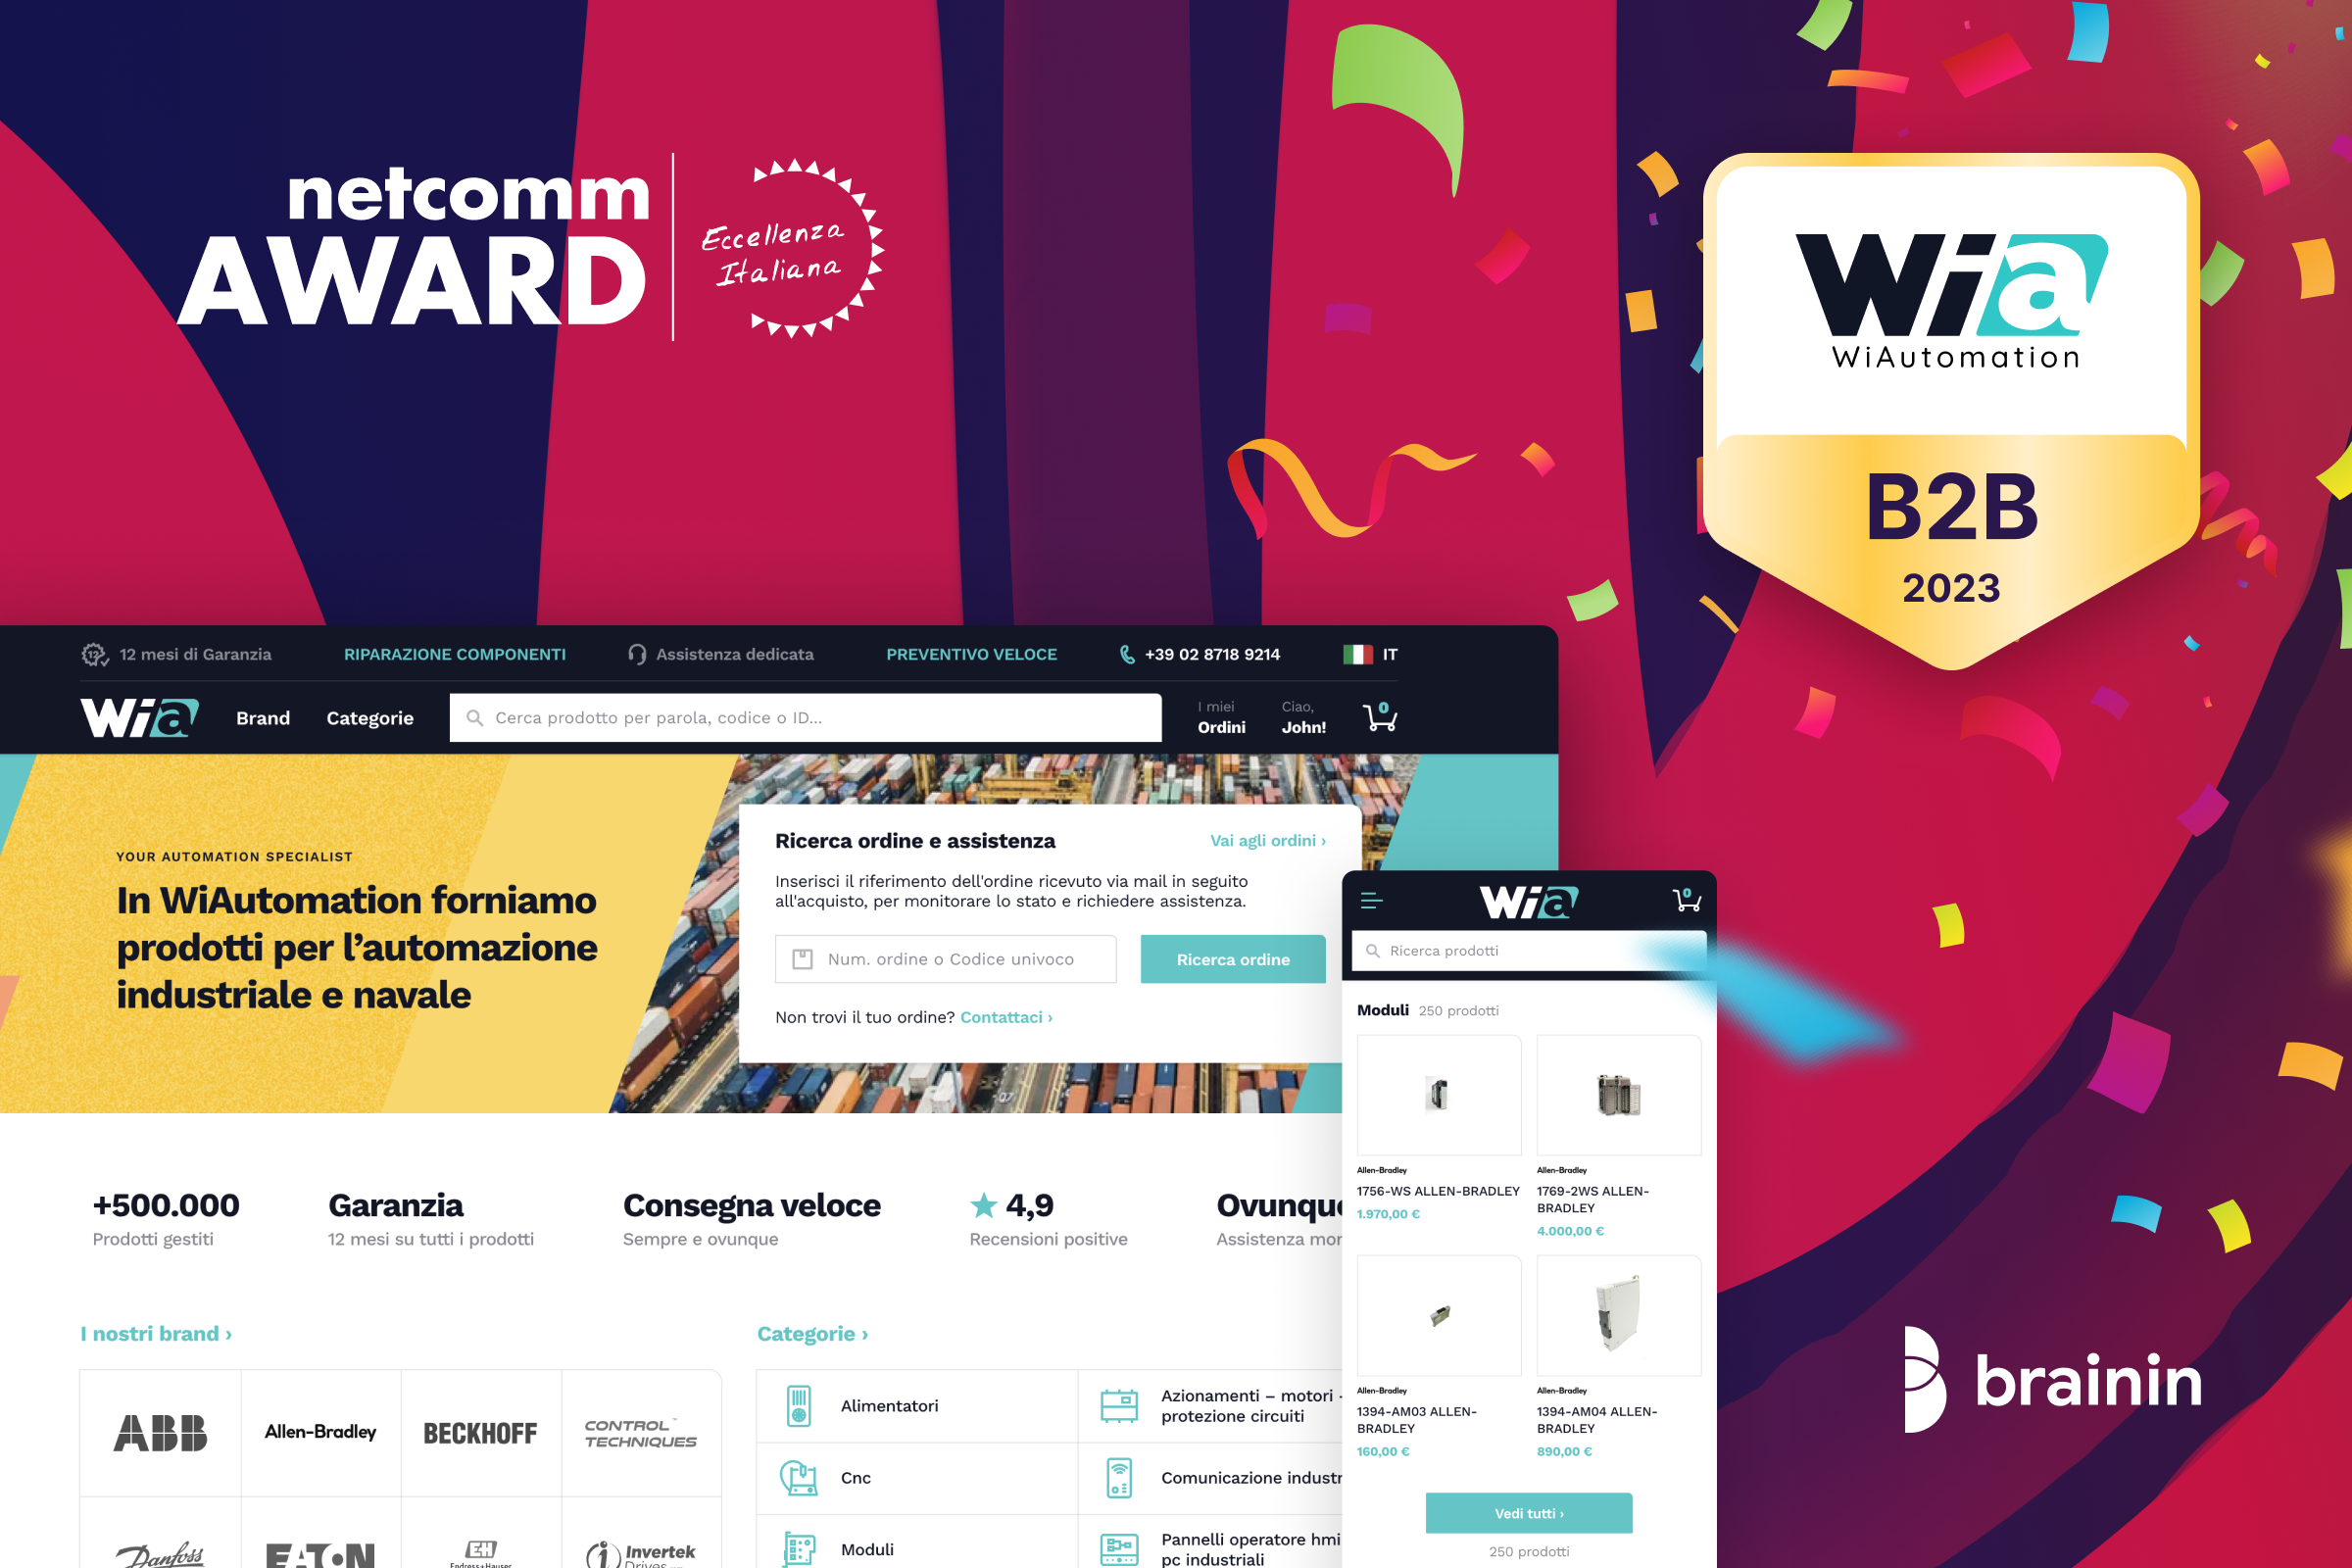 WiAutomation miglior eCommerce B2B in Italia al Netcomm Award 2023